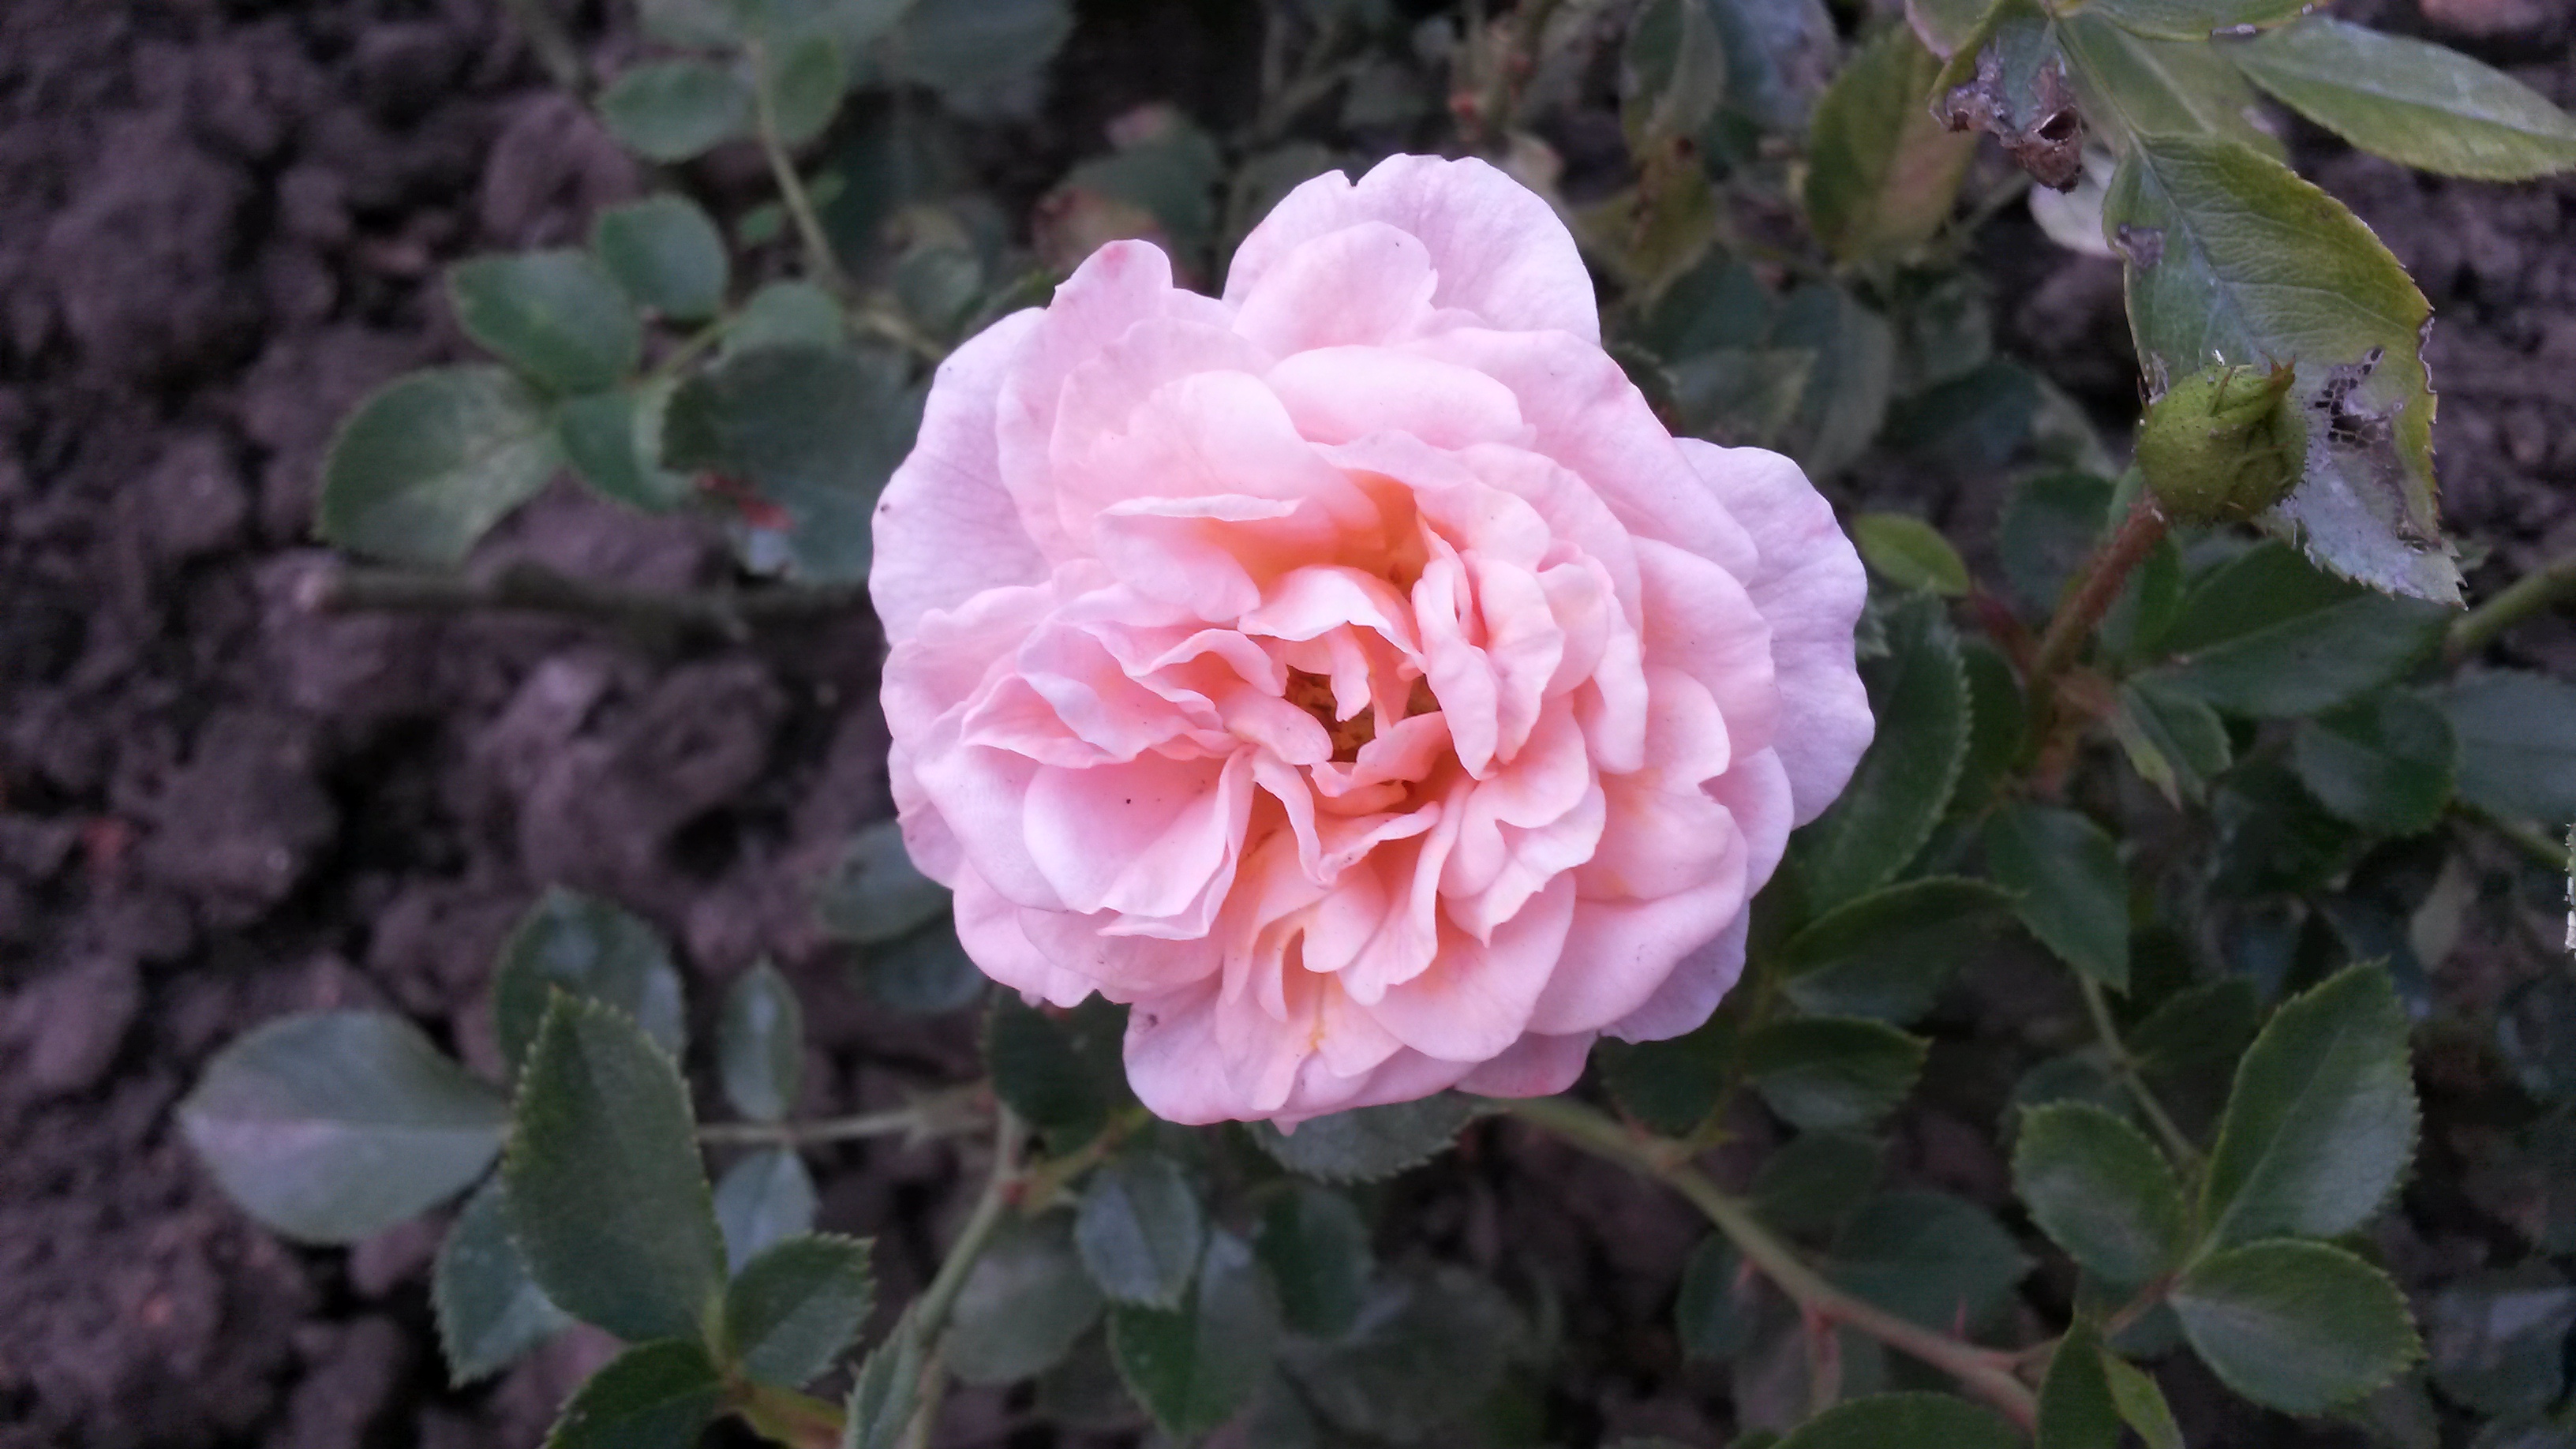 Роза Peach Clementine